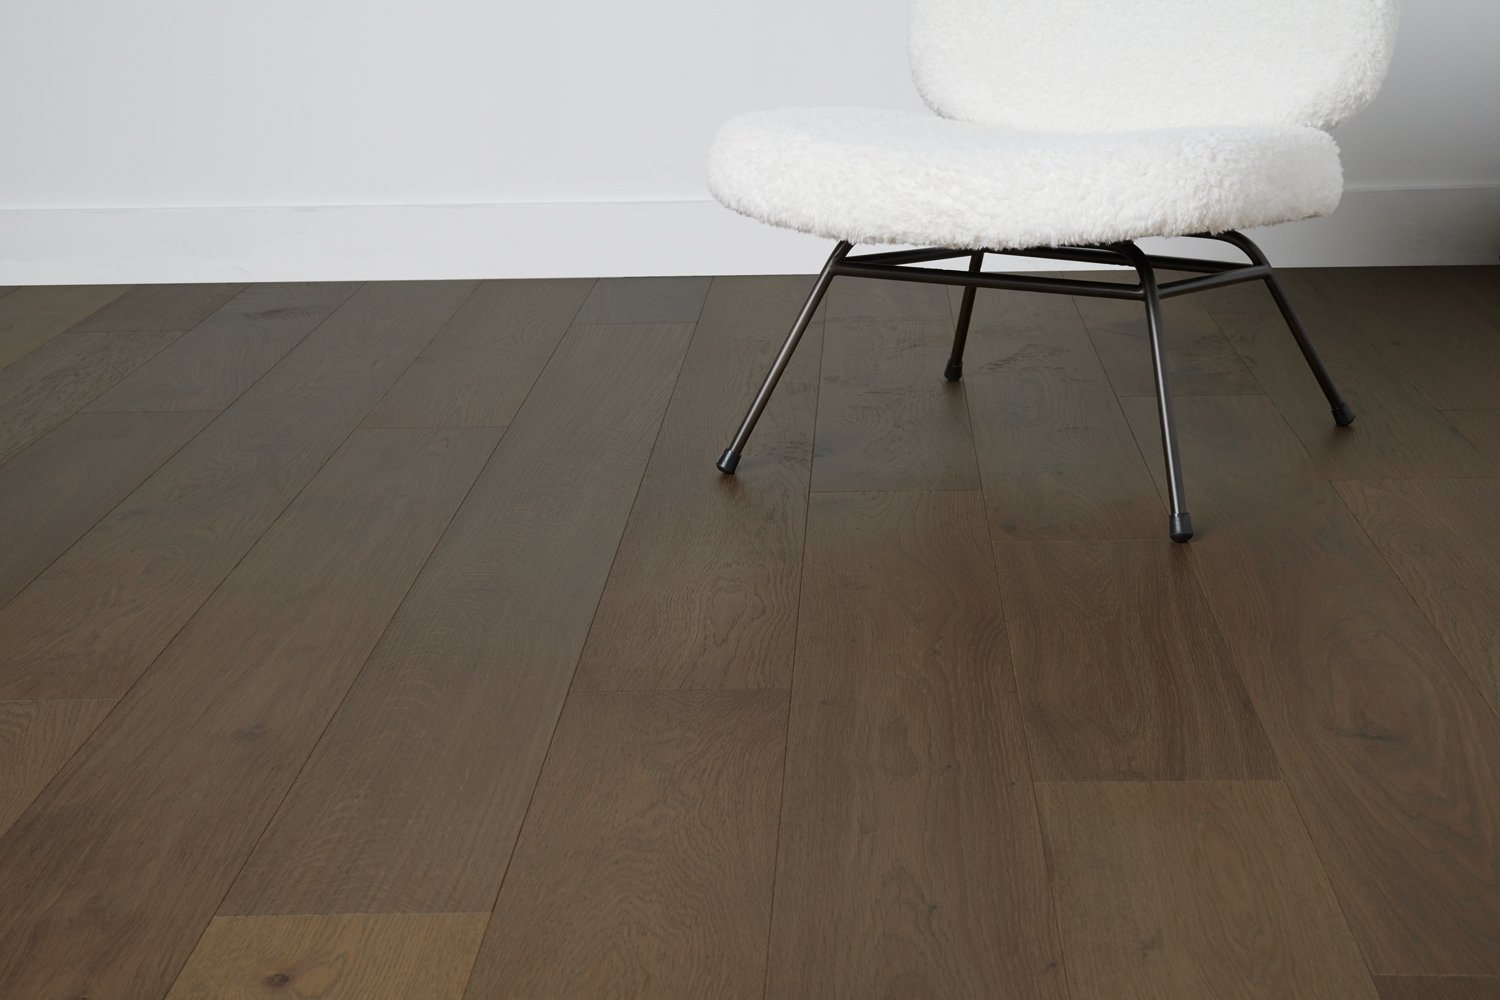 Imperia 7-1/2″ Wide – White Oak Engineered Hardwood Flooring